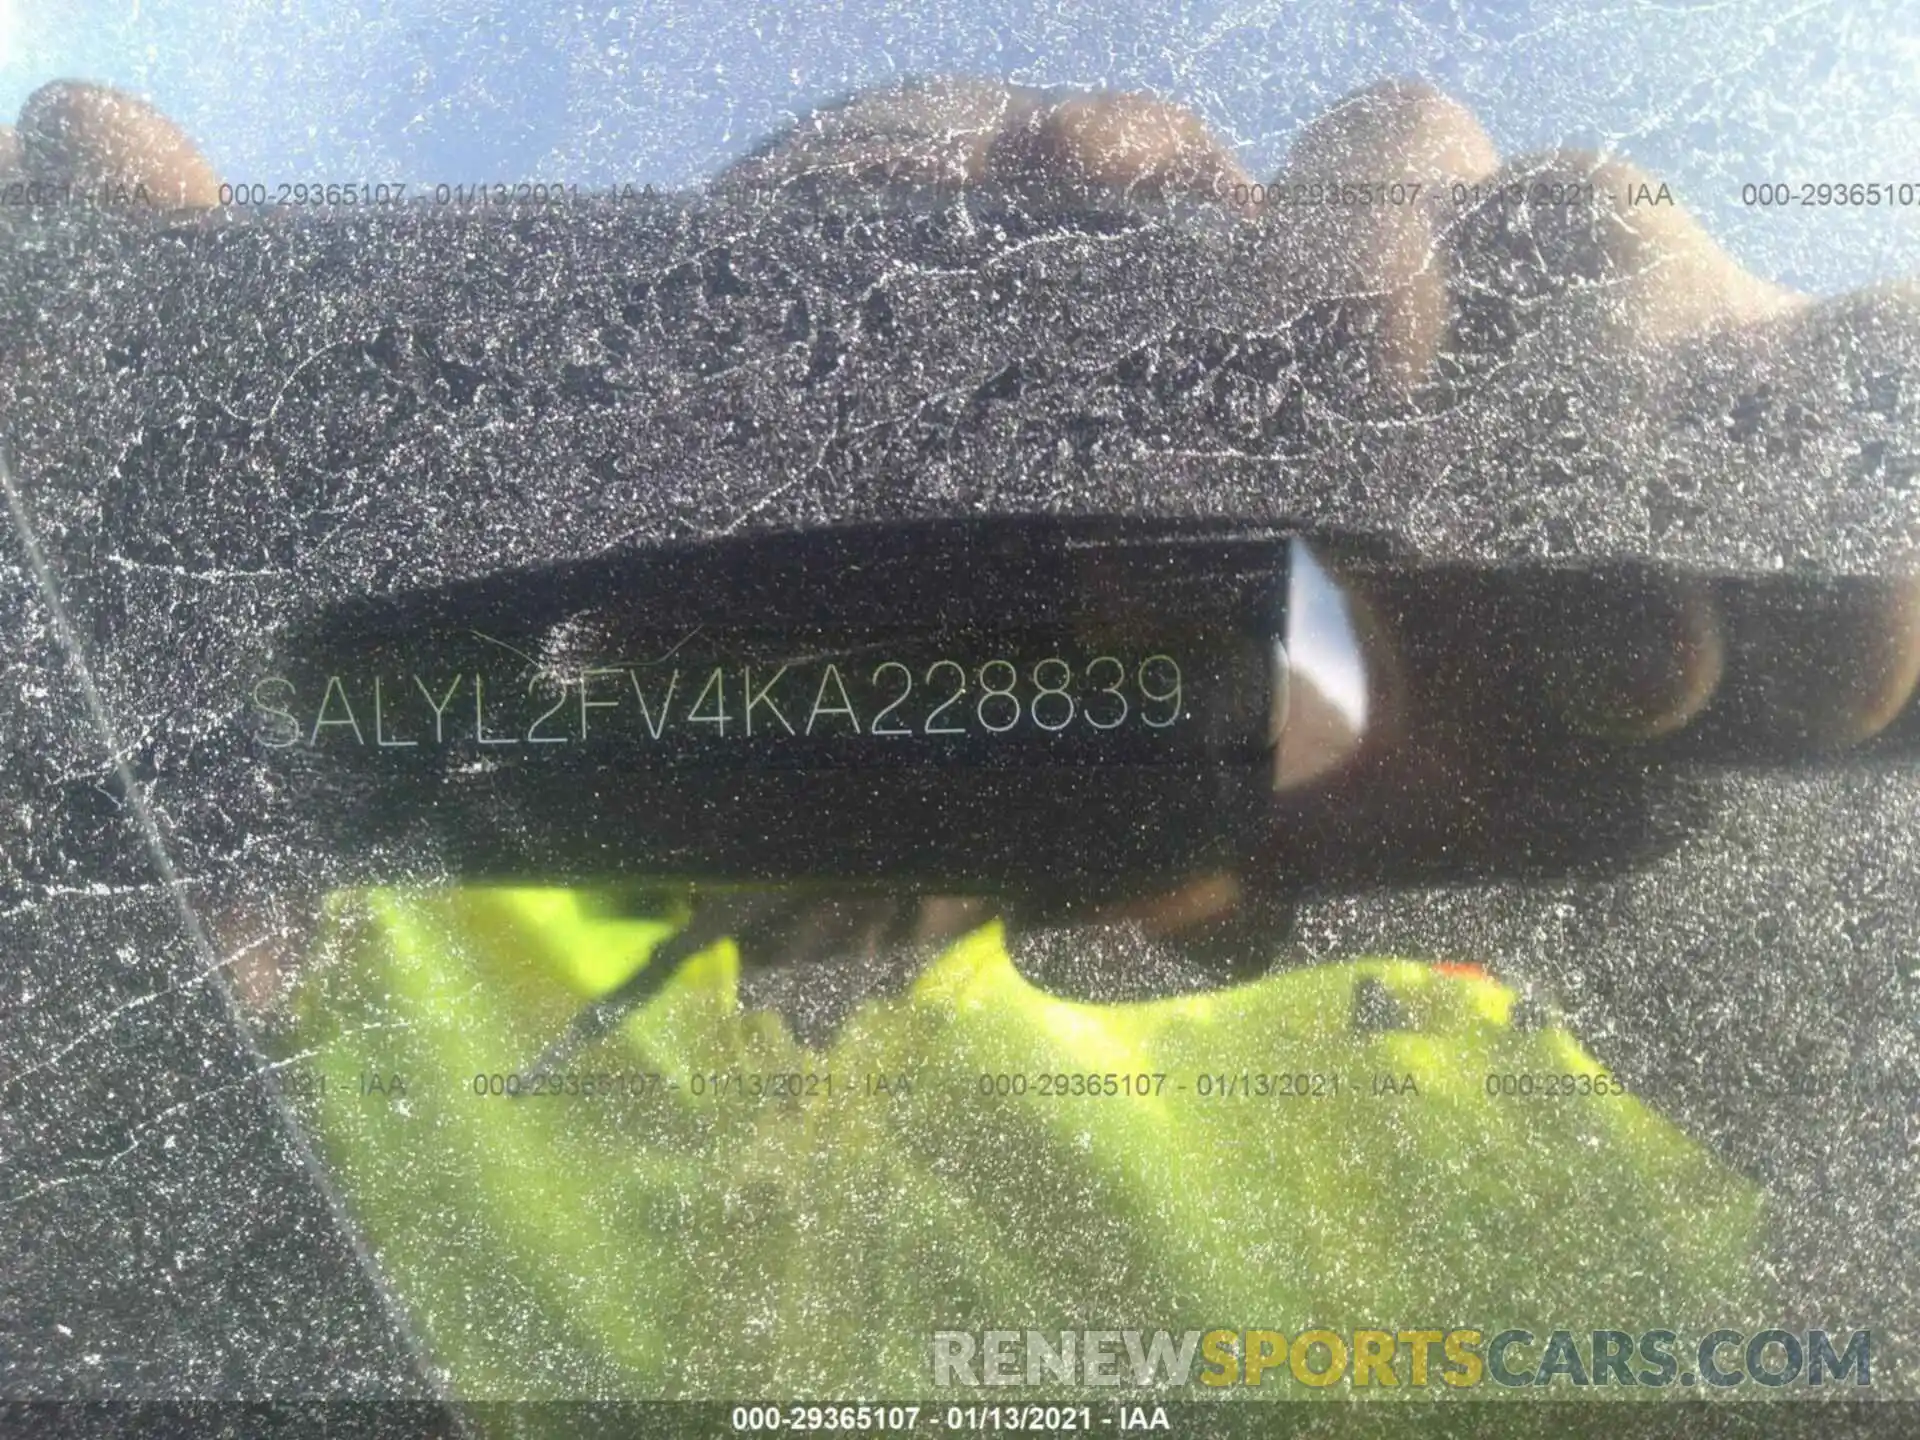 9 Photograph of a damaged car SALYL2FV4KA228839 LAND ROVER RANGE ROVER VELAR 2019